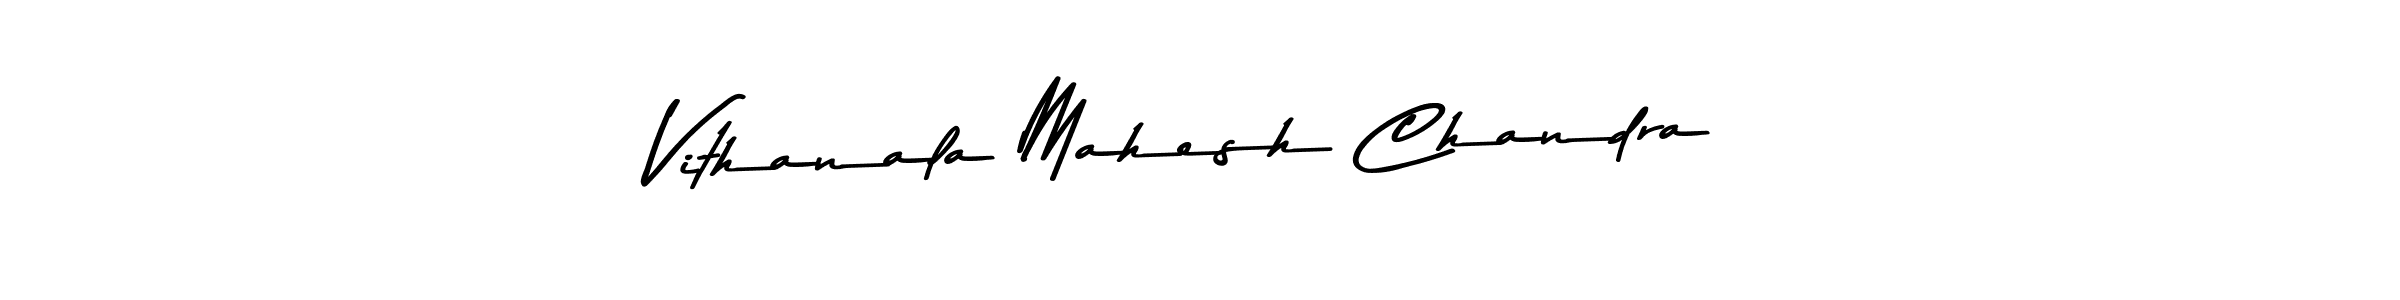 Vithanala Mahesh Chandra stylish signature style. Best Handwritten Sign (Asem Kandis PERSONAL USE) for my name. Handwritten Signature Collection Ideas for my name Vithanala Mahesh Chandra. Vithanala Mahesh Chandra signature style 9 images and pictures png